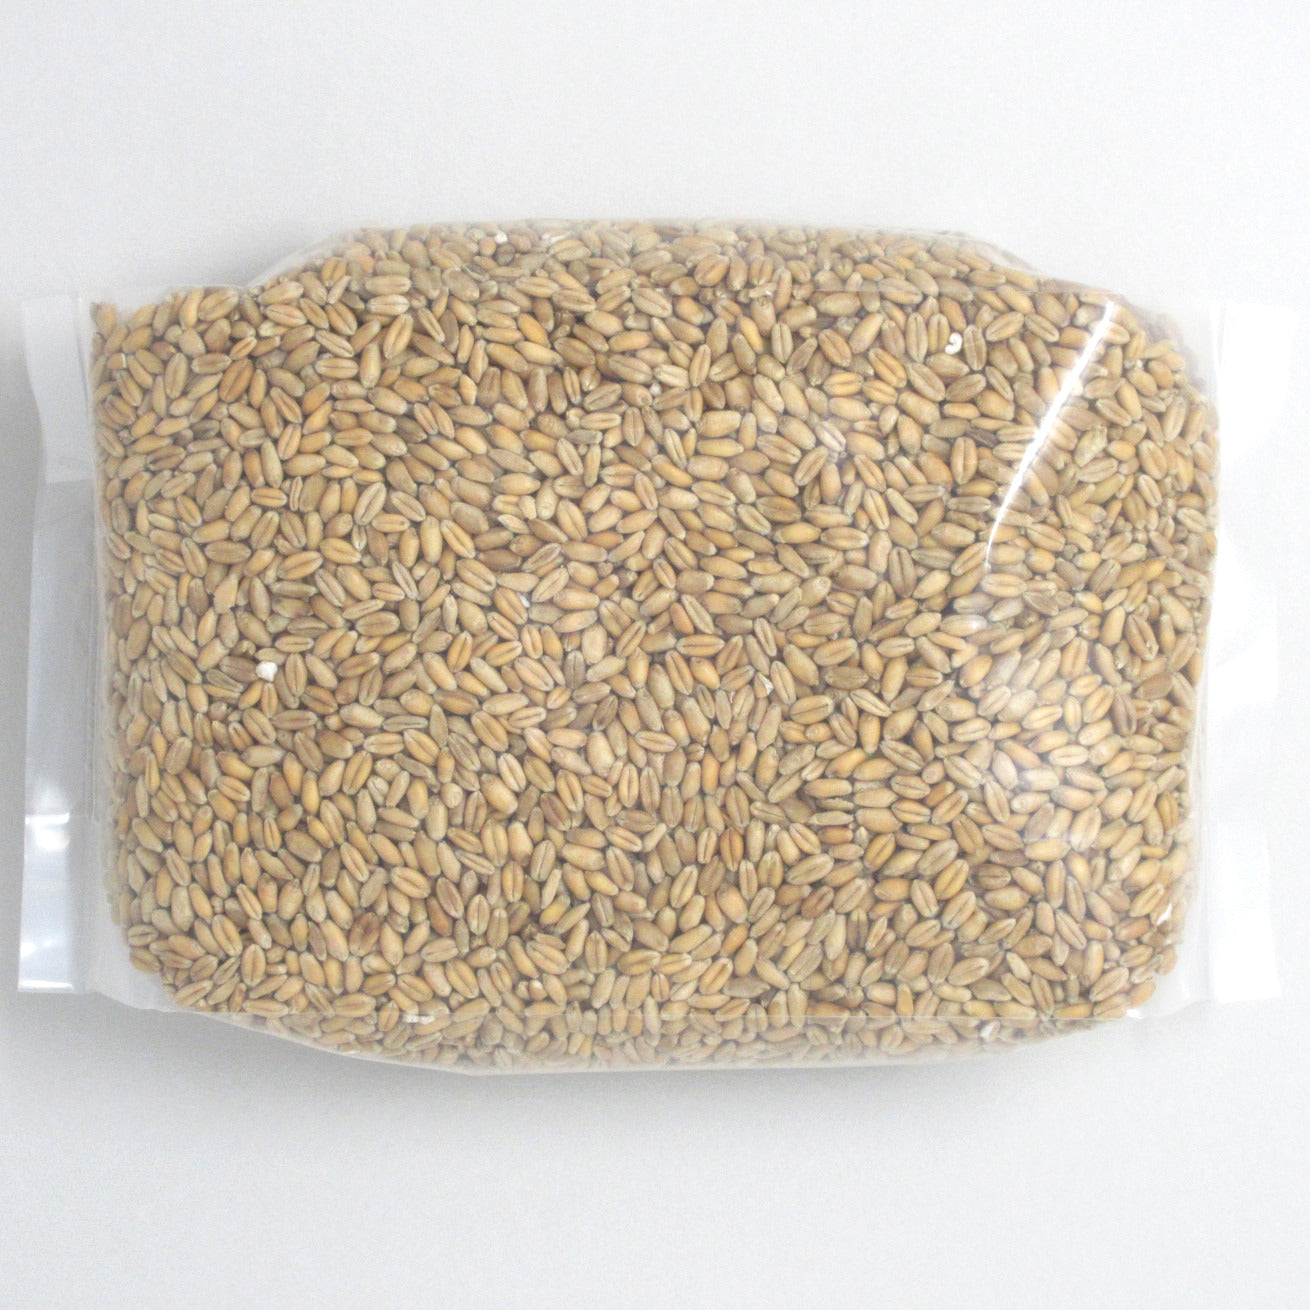 Flour Barrel product image - Wheat Kernels Soft